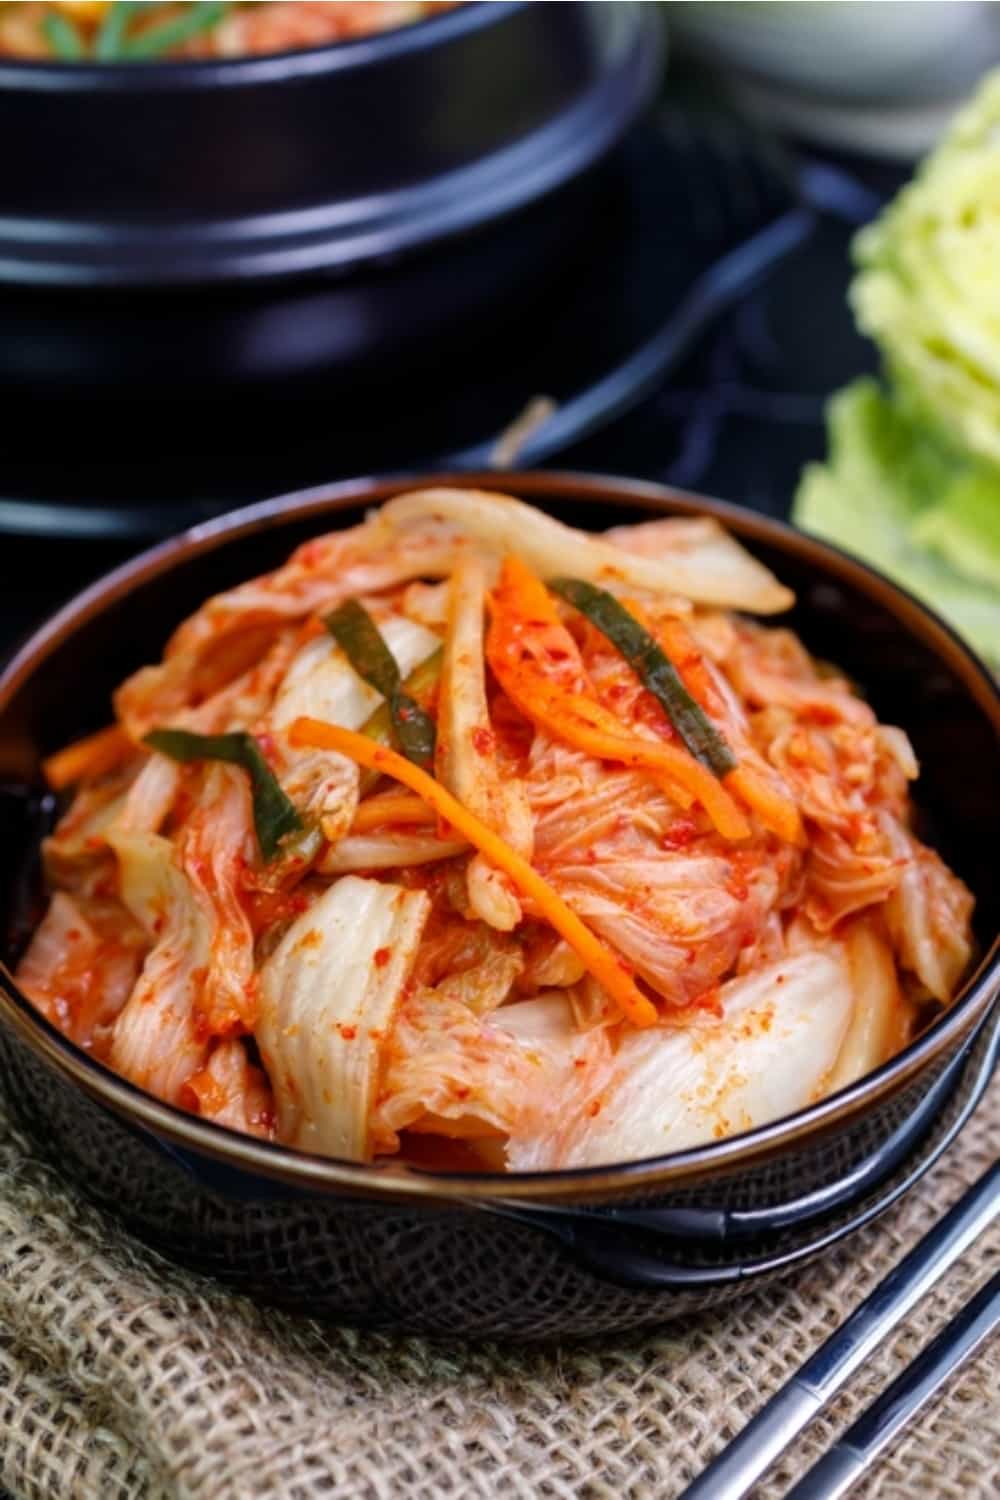 kimchi in a shiny black bowl